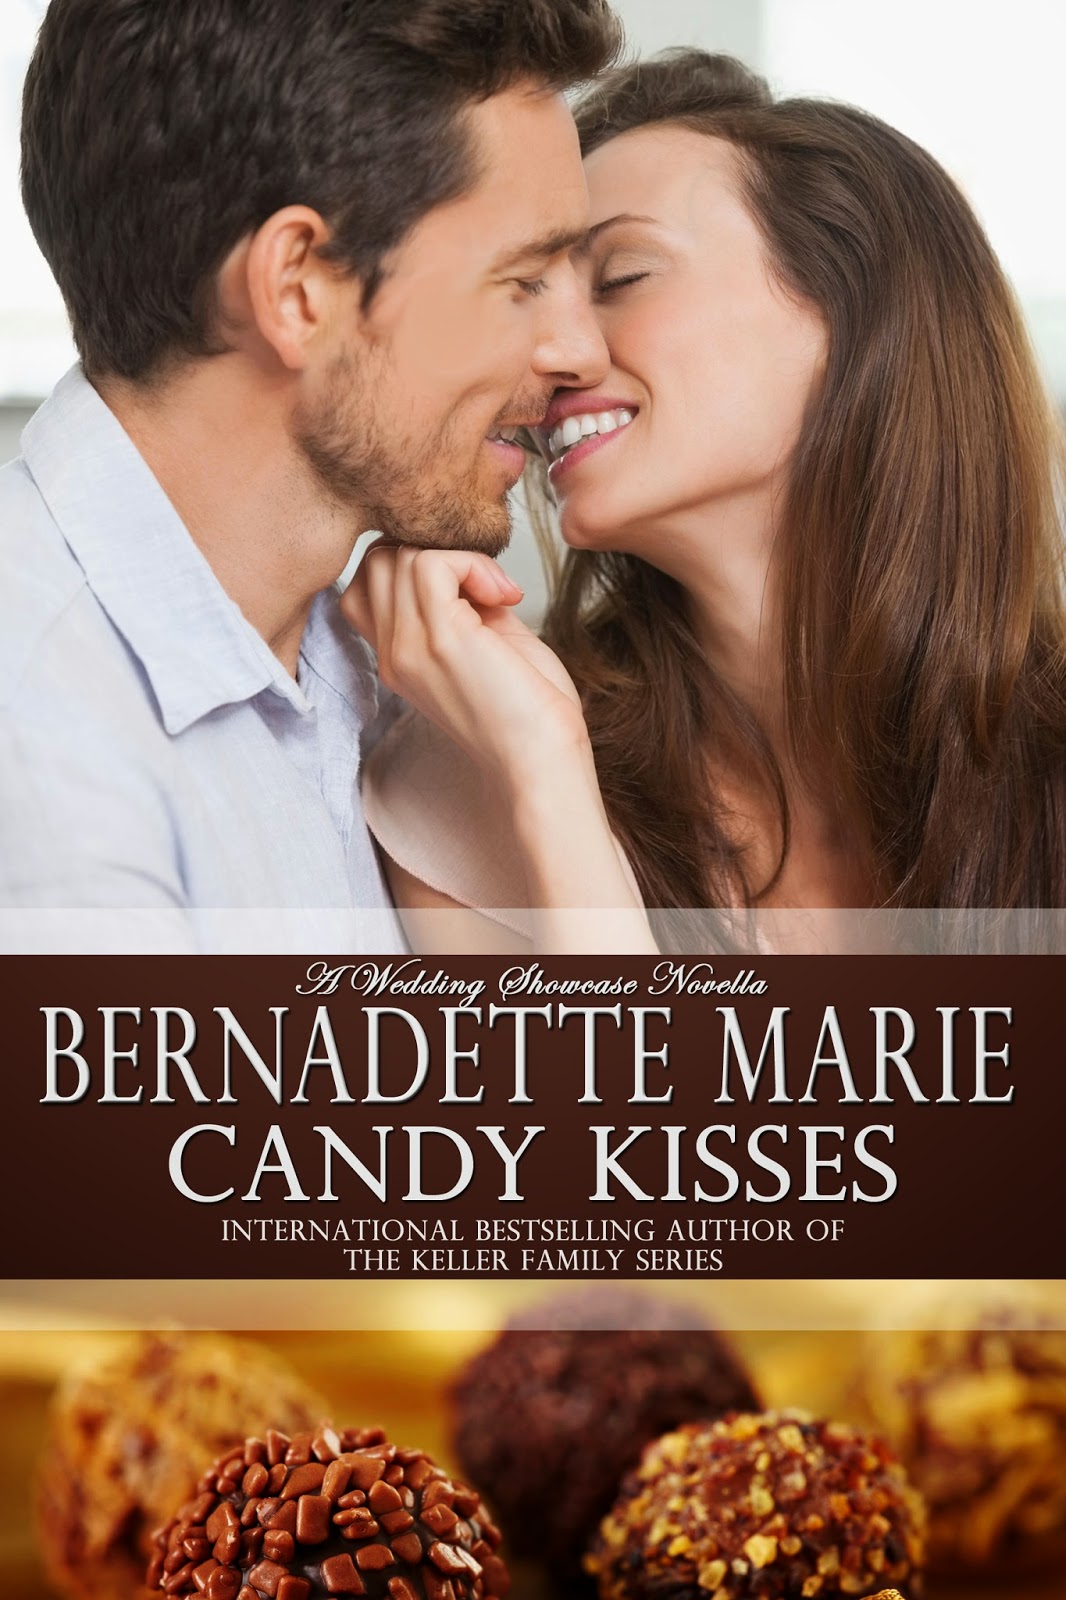 Candy maria. Киссес. Candy Marie. A Thousand boy Kisses книга обложка.